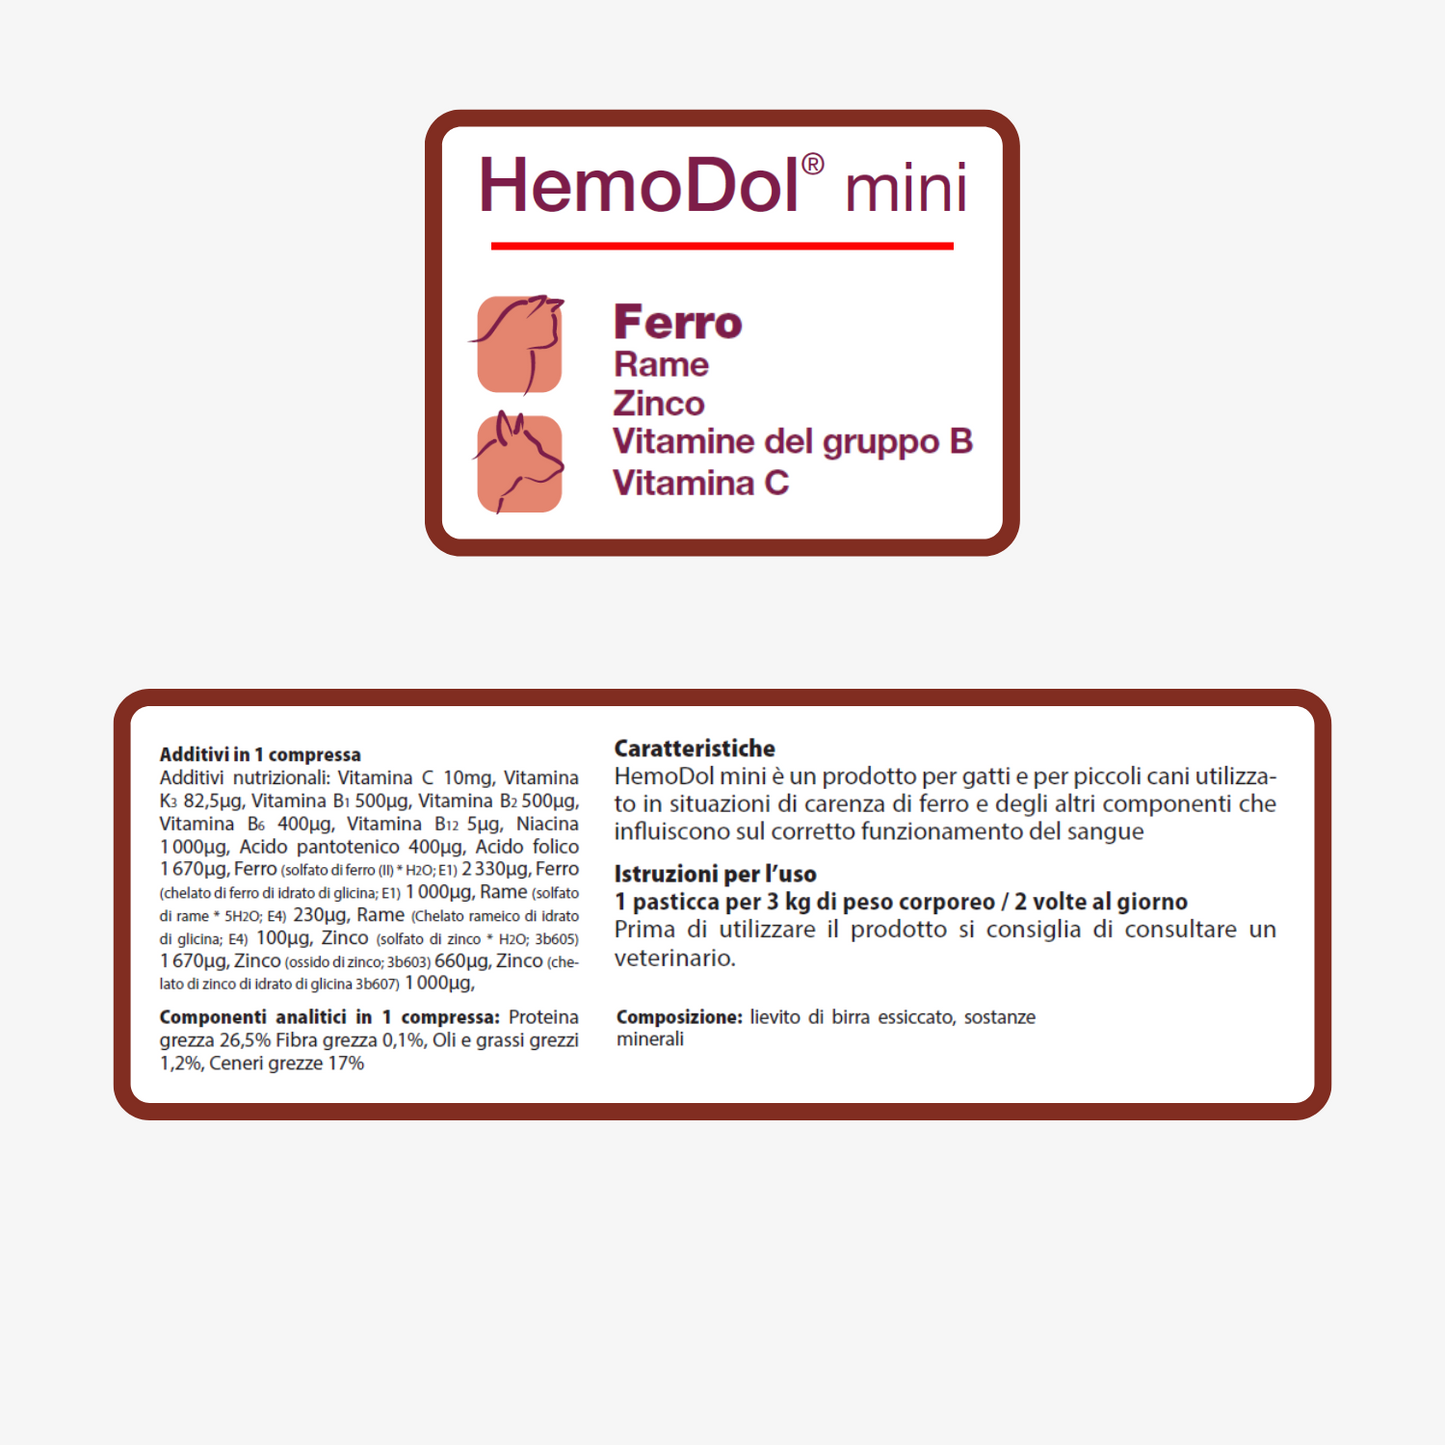 HemoDol mini 60 ".. Ferro chelato, Zinco chelato, Rame chelato, Vitamine .... "